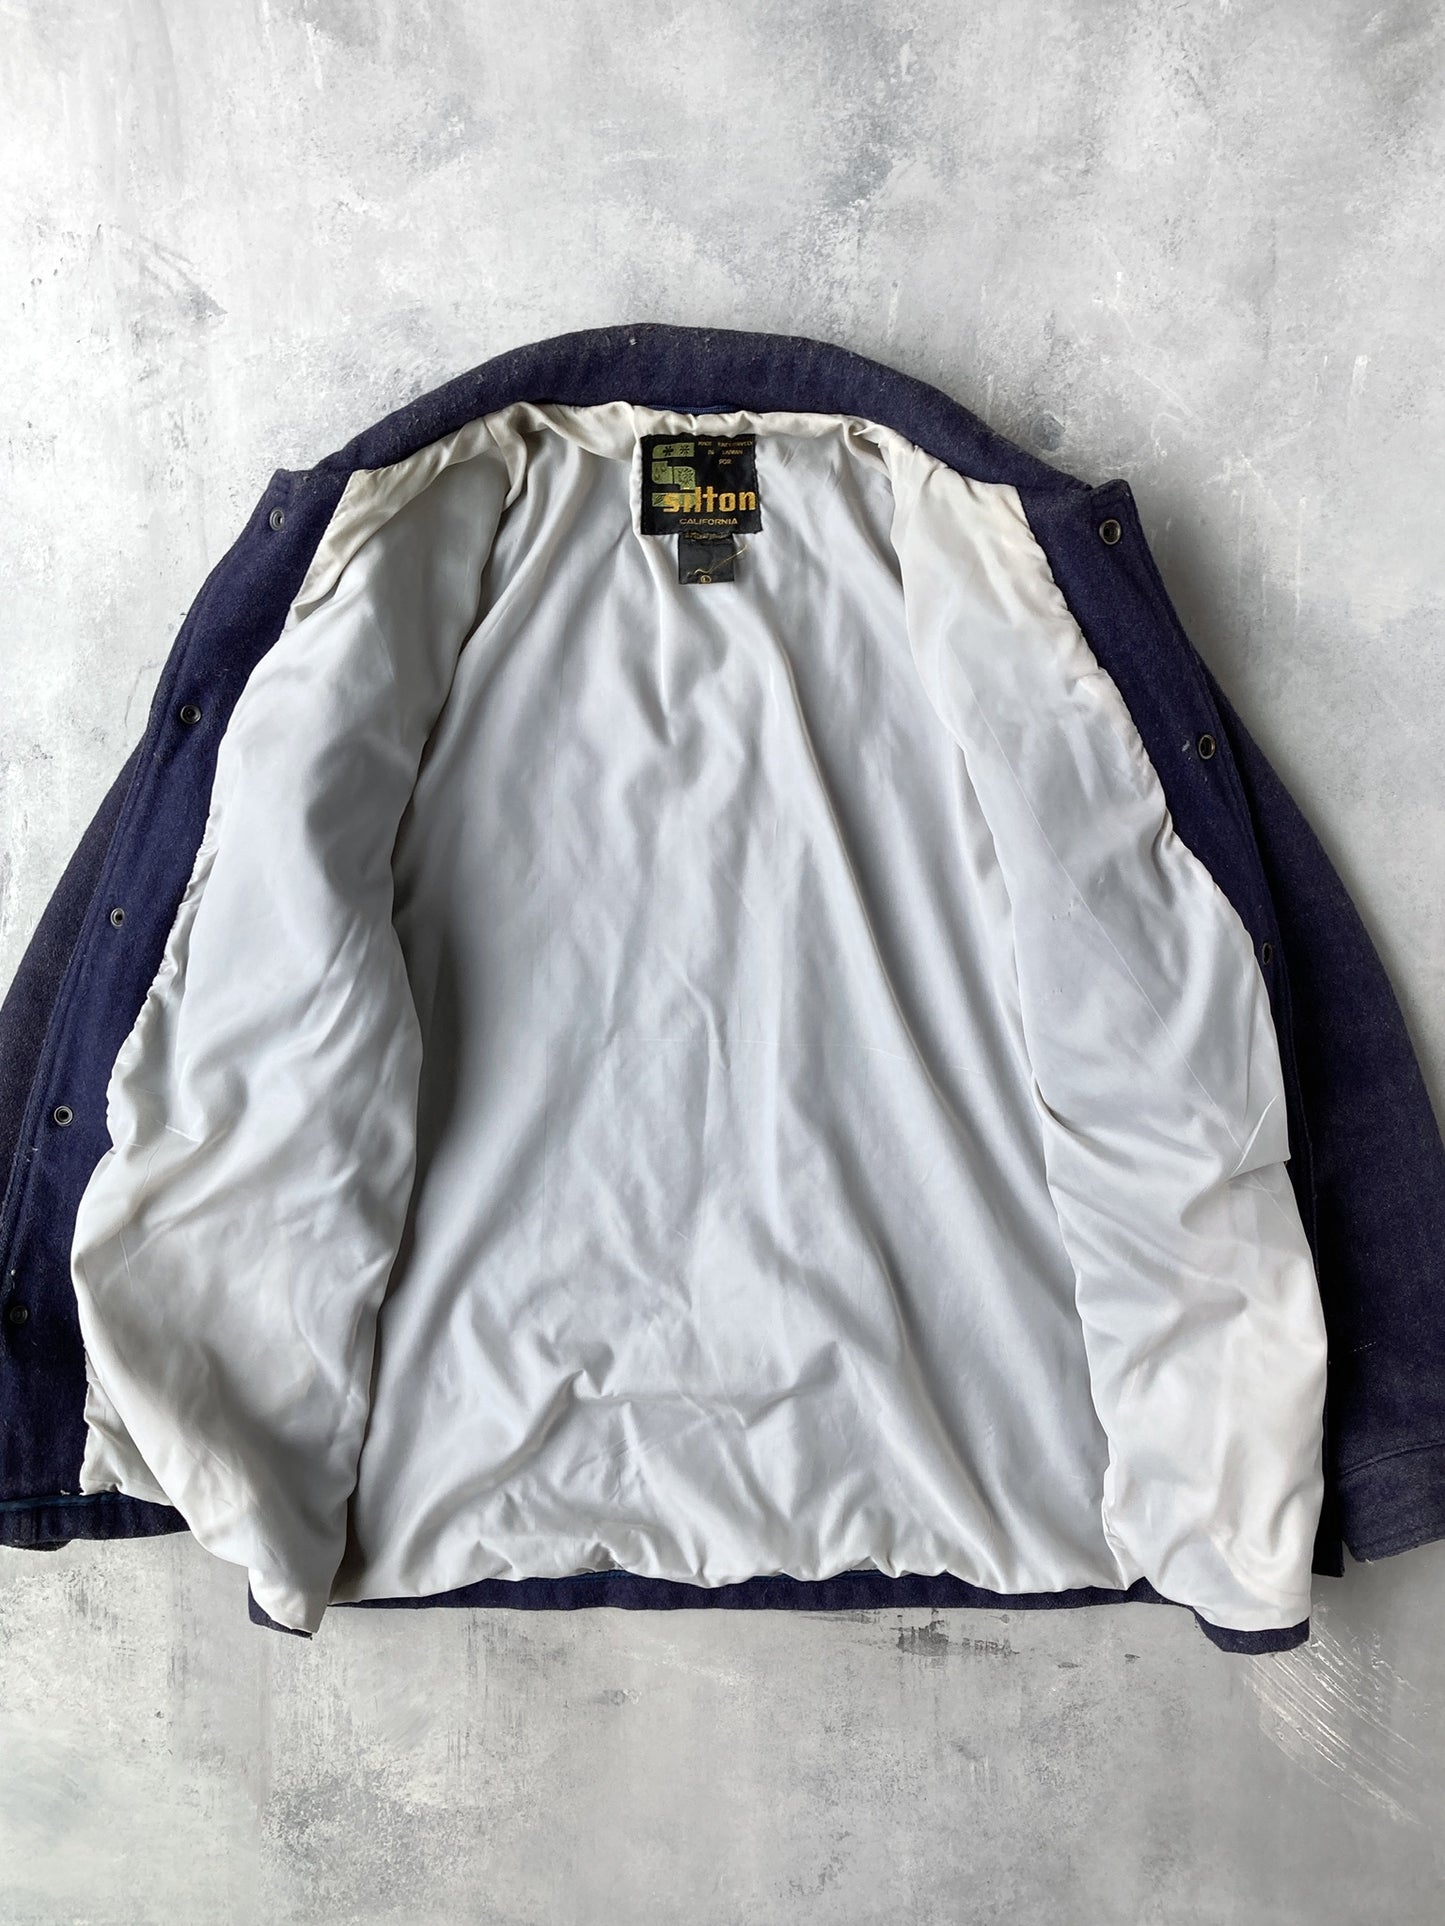 Wool Shirt Jacket 80's - Medium / Large